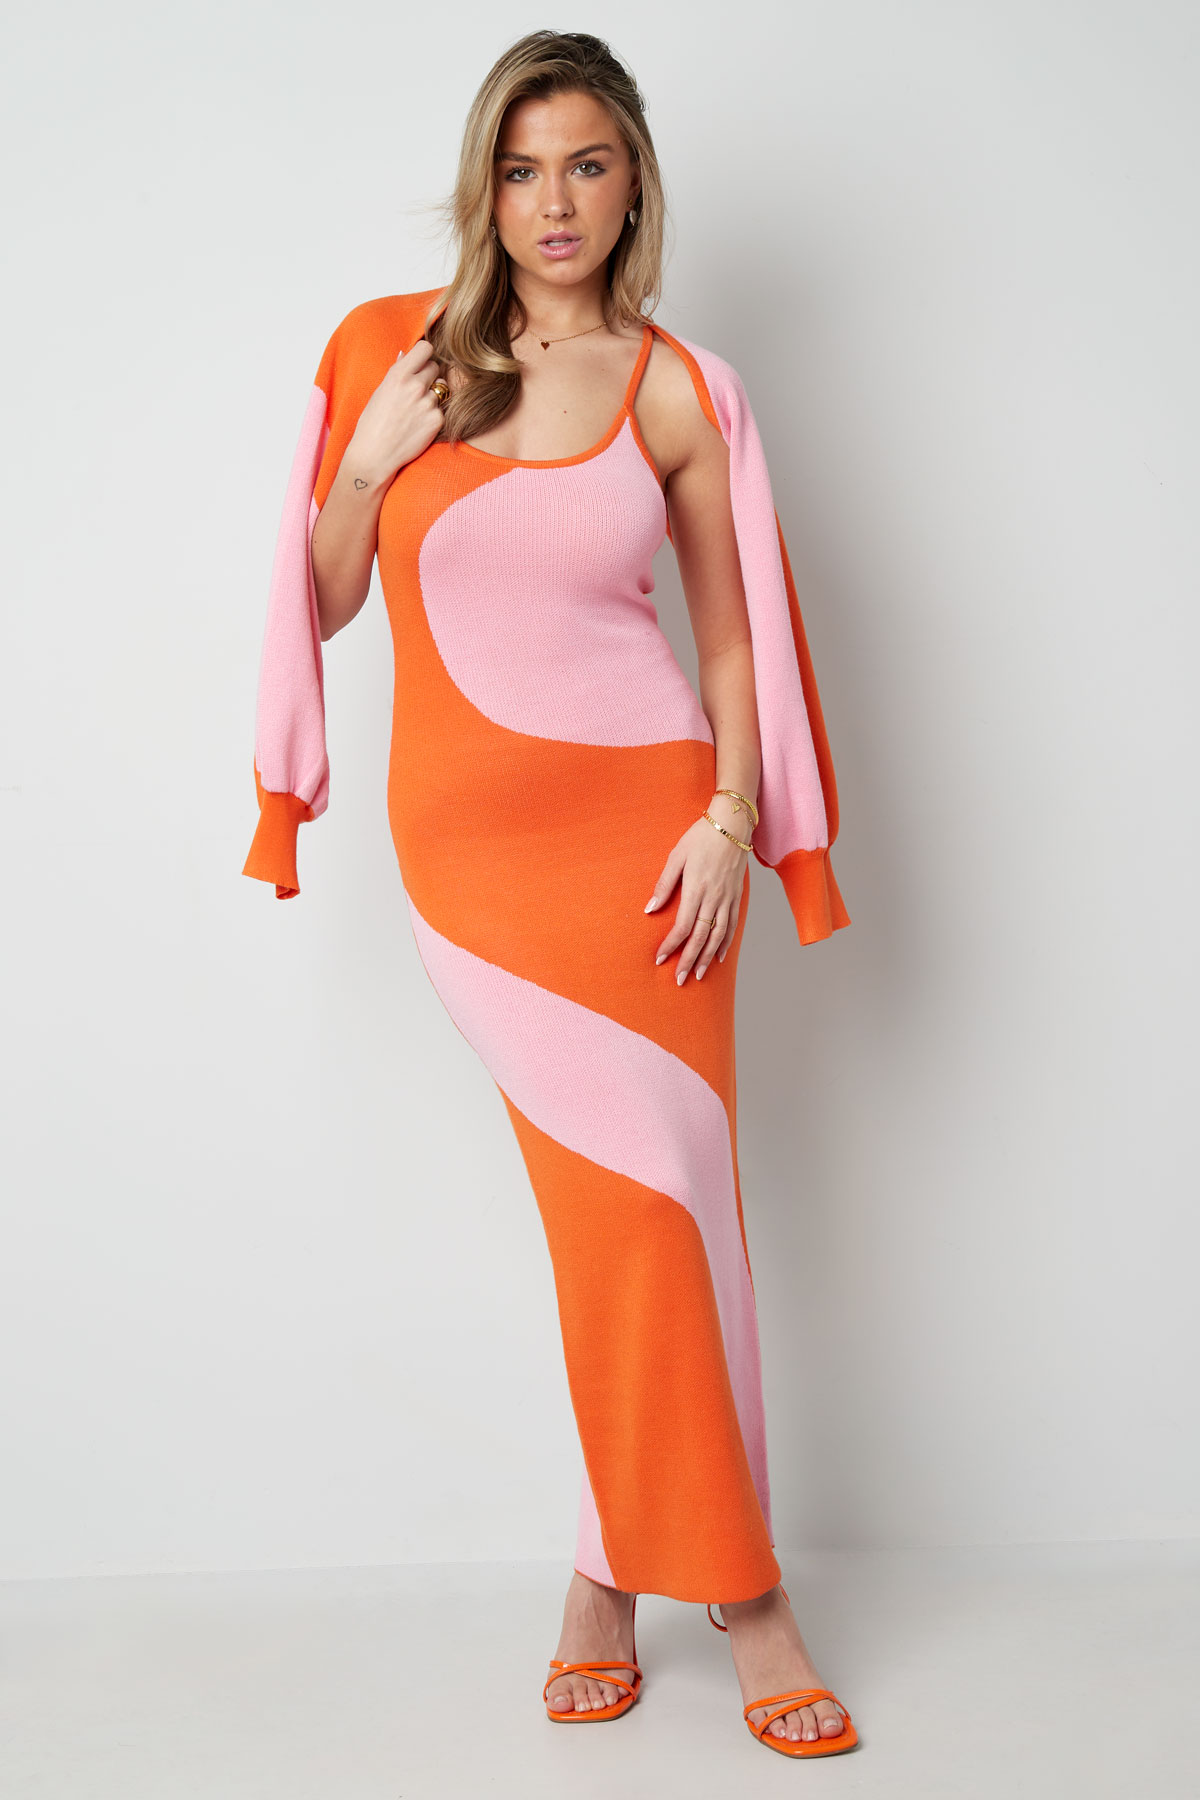 Vestido estampado orgánico - rosa naranja Imagen6